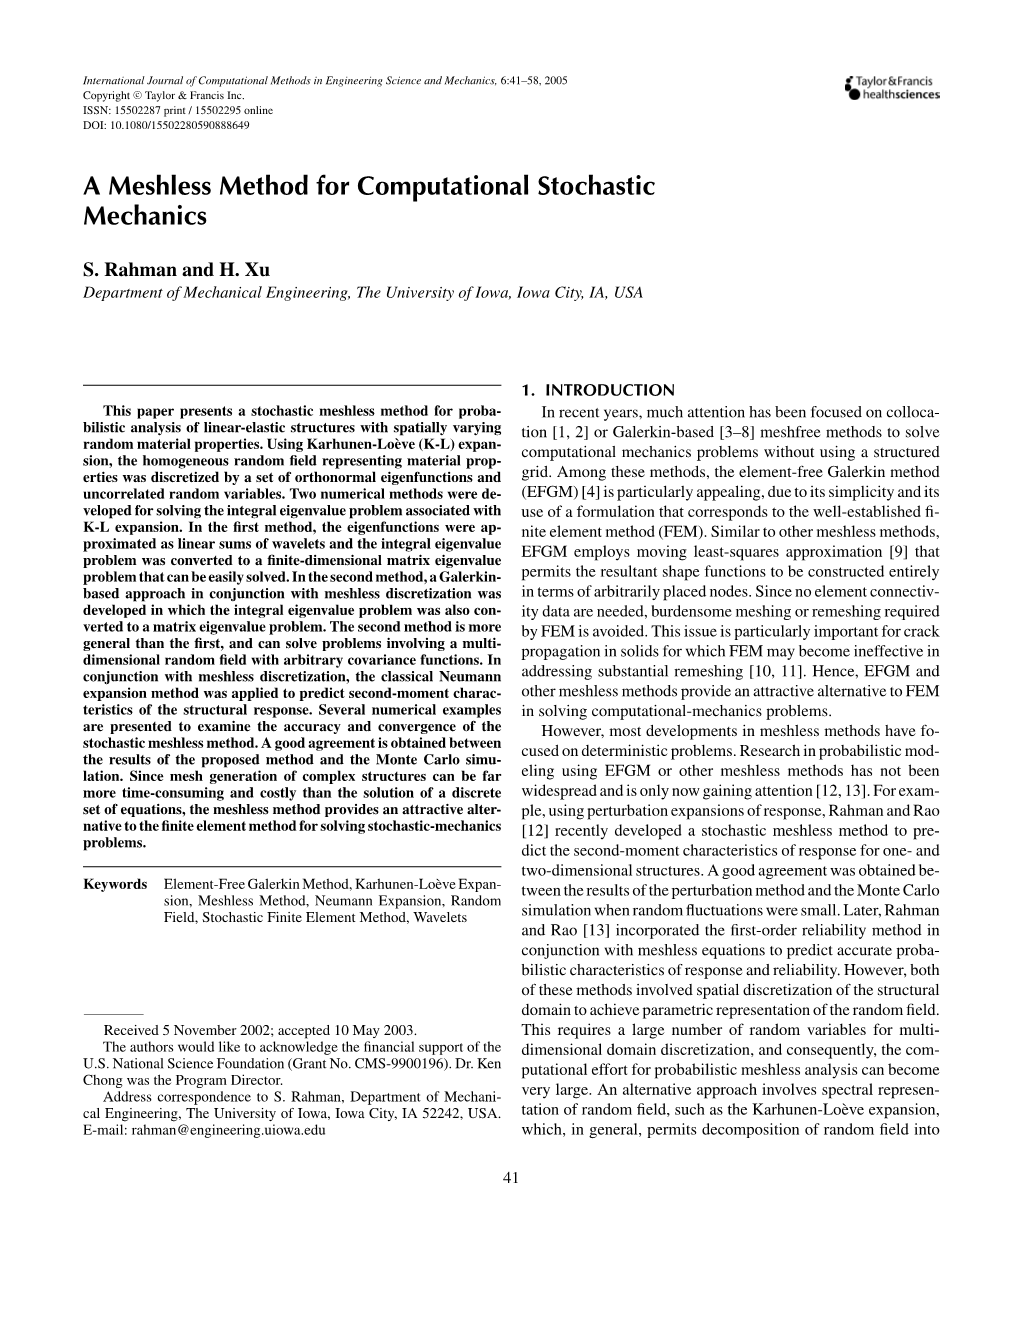 A Meshless Method for Computational Stochastic Mechanics